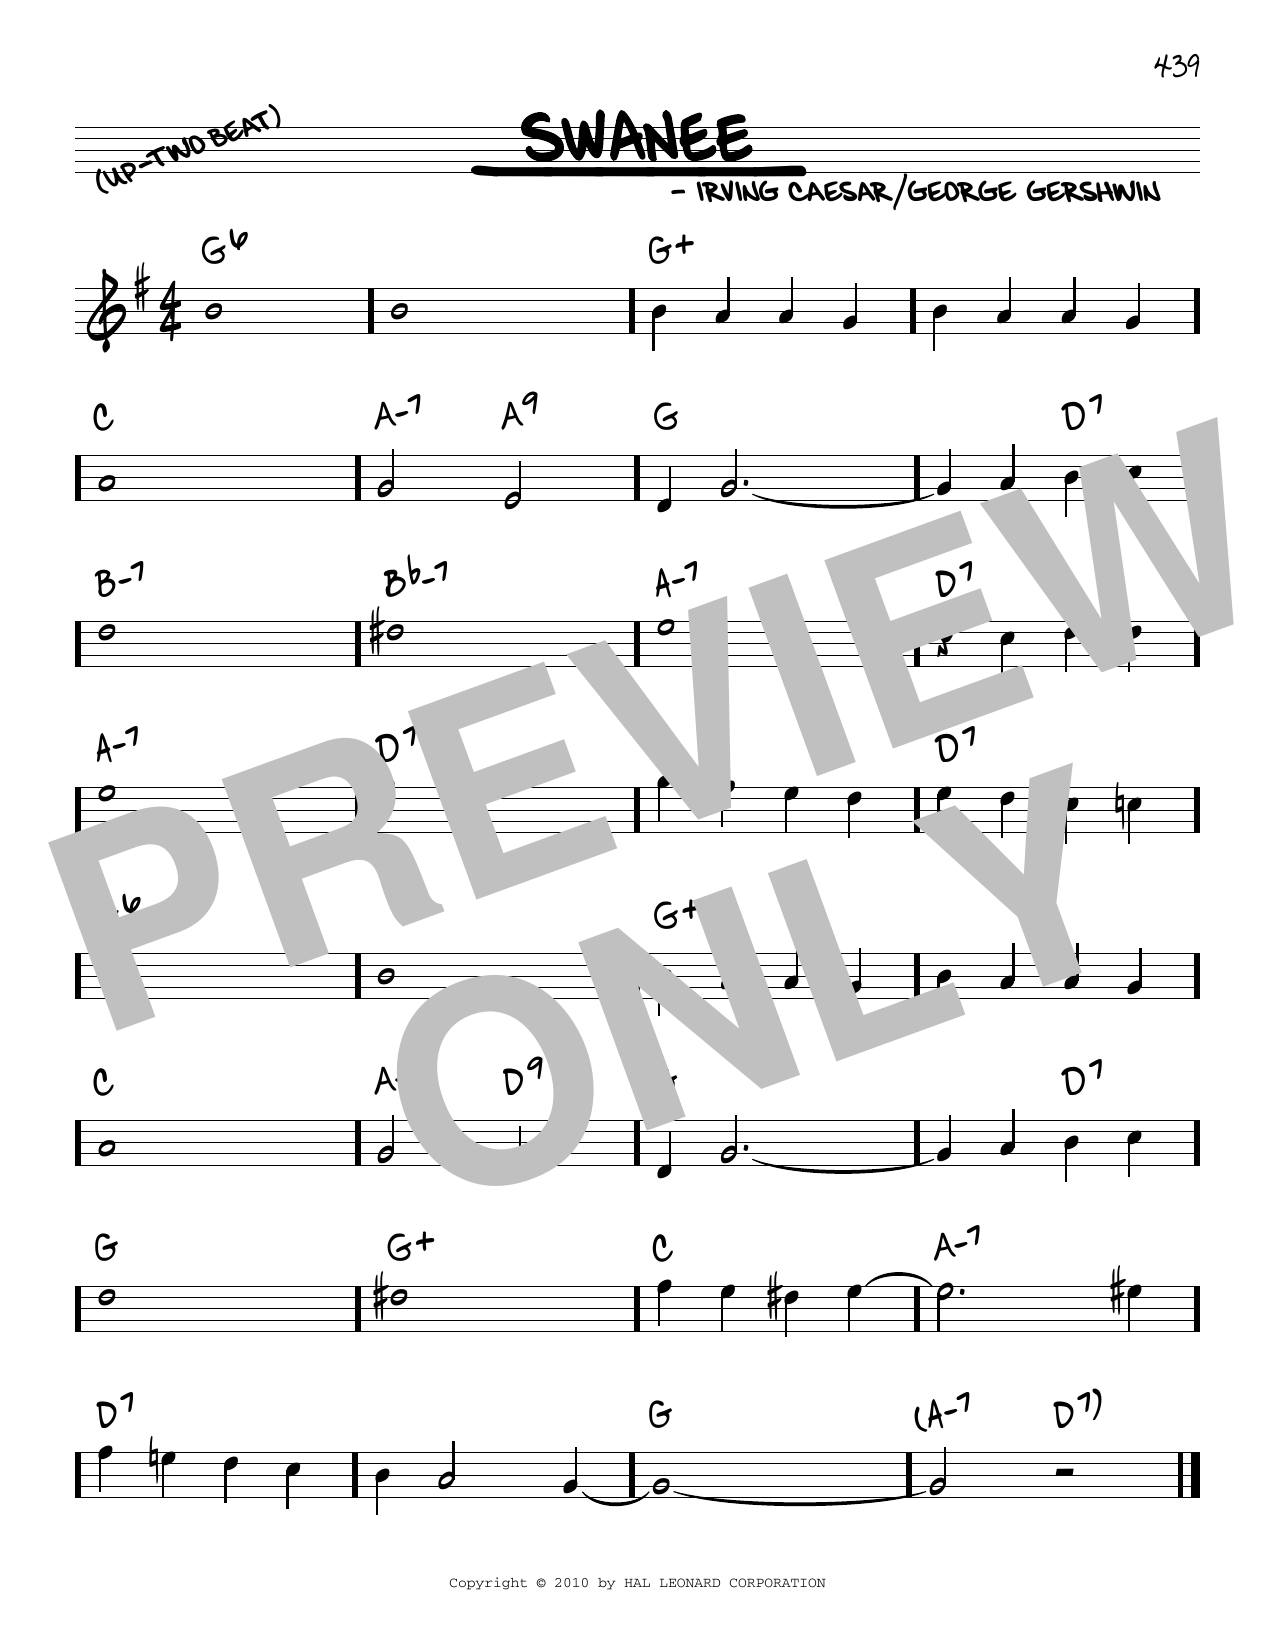 Download George Gershwin Swanee Sheet Music